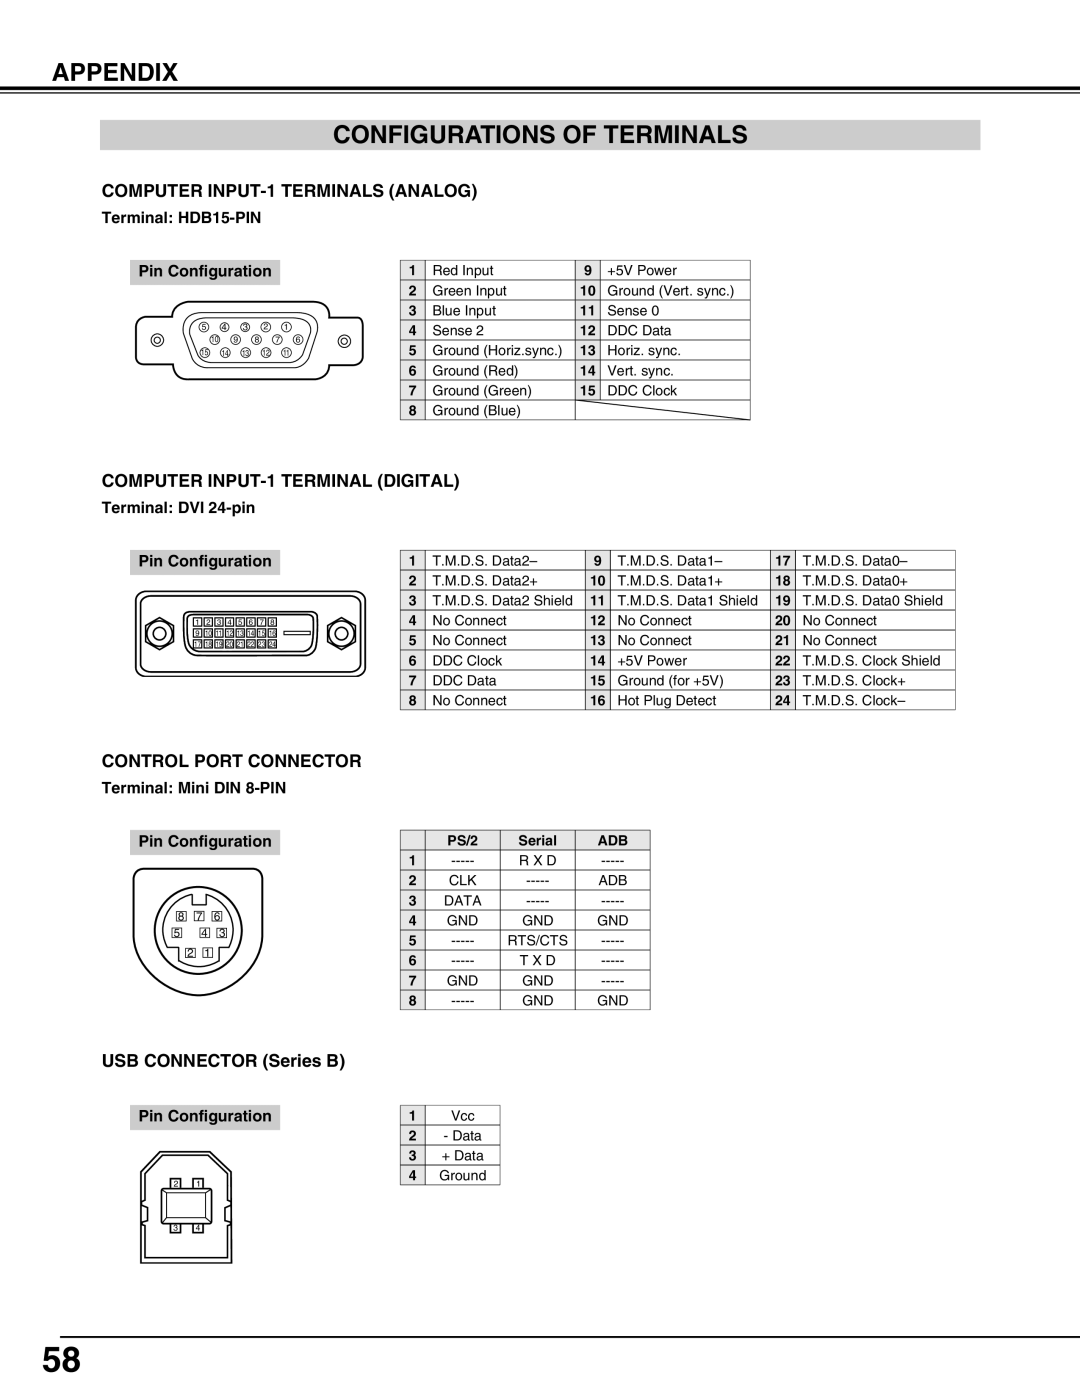 Eiki LC-X71L owner manual Terminal HDB15-PIN, Pin Configuration, Terminal DVI 24-pin, Terminal Mini DIN 8-PIN 